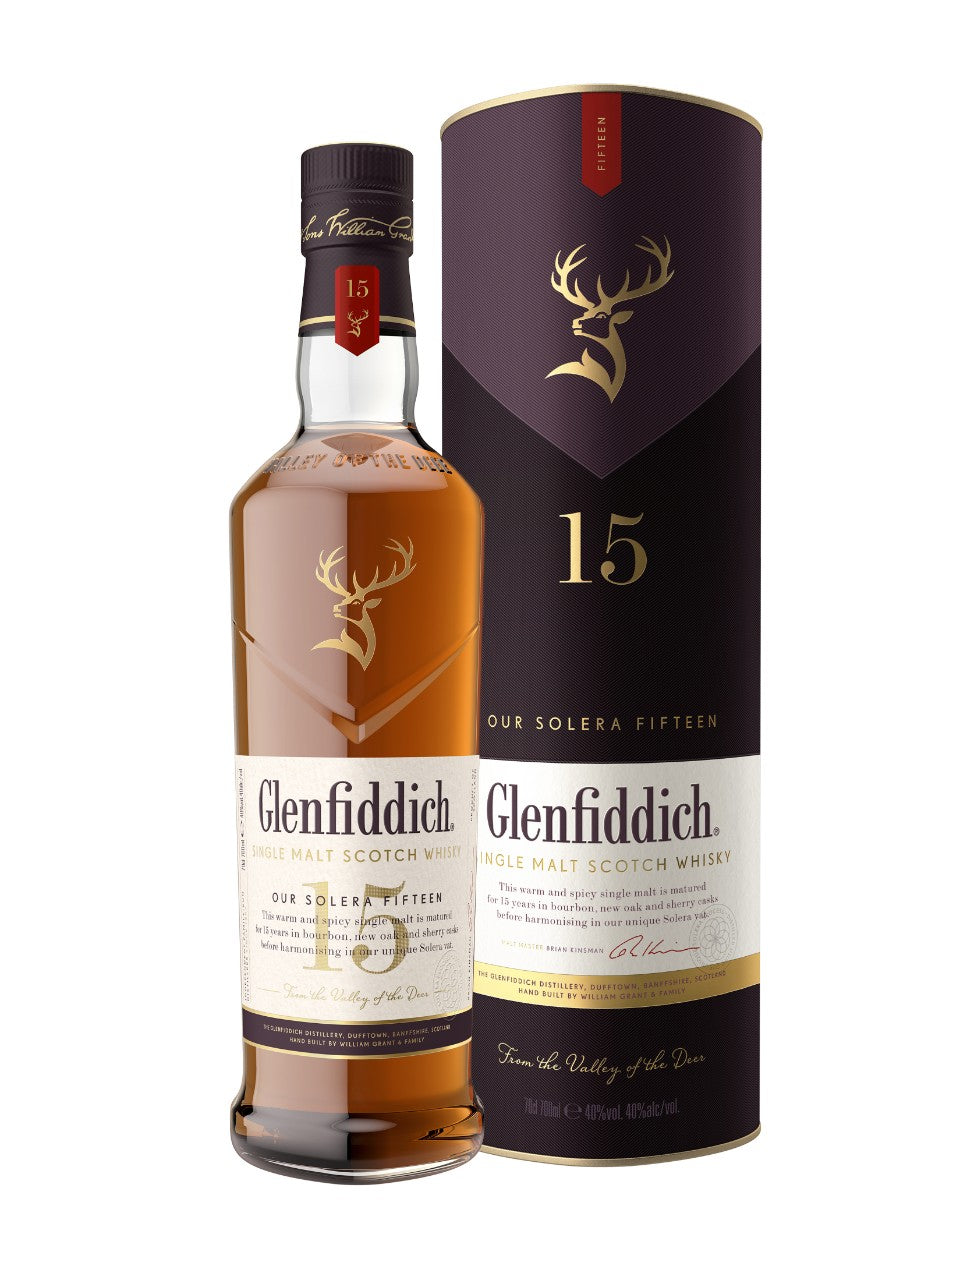 Glenfiddich 15 Year Old Single Malt Scotch Whisky 750 ml bottle